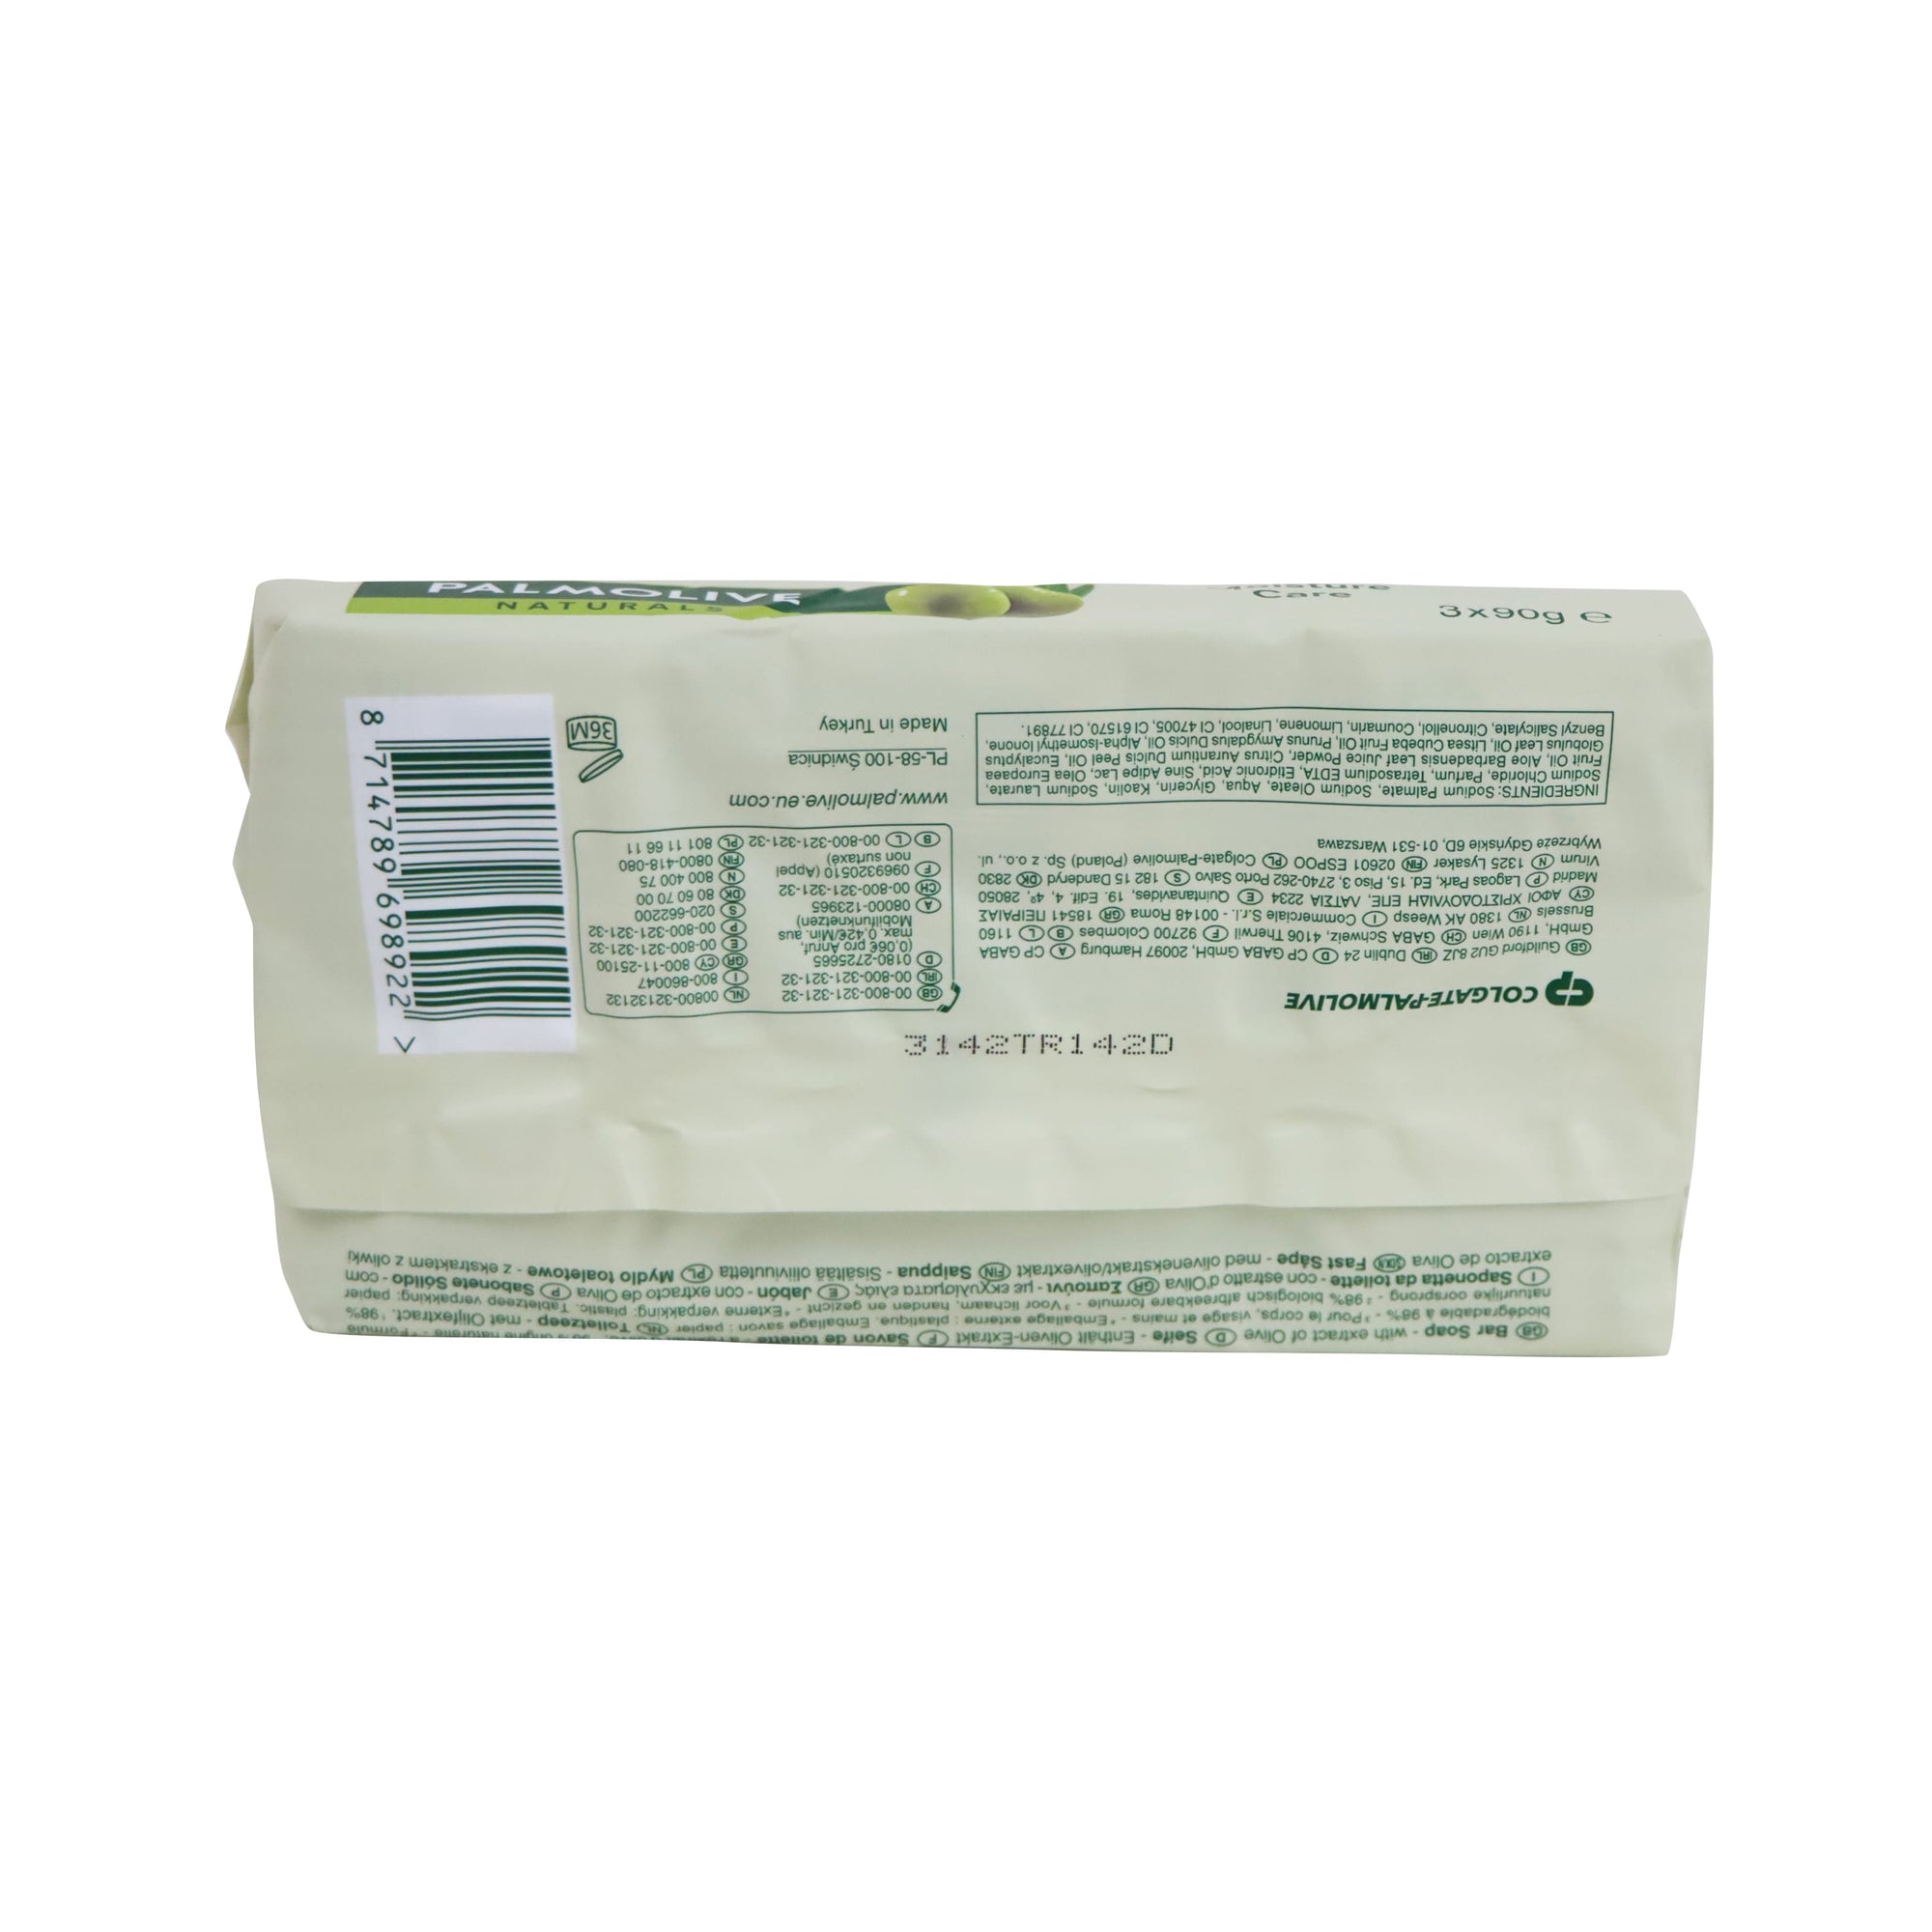 Palmolive Naturals Moisture Care Bar Soap 3x90g